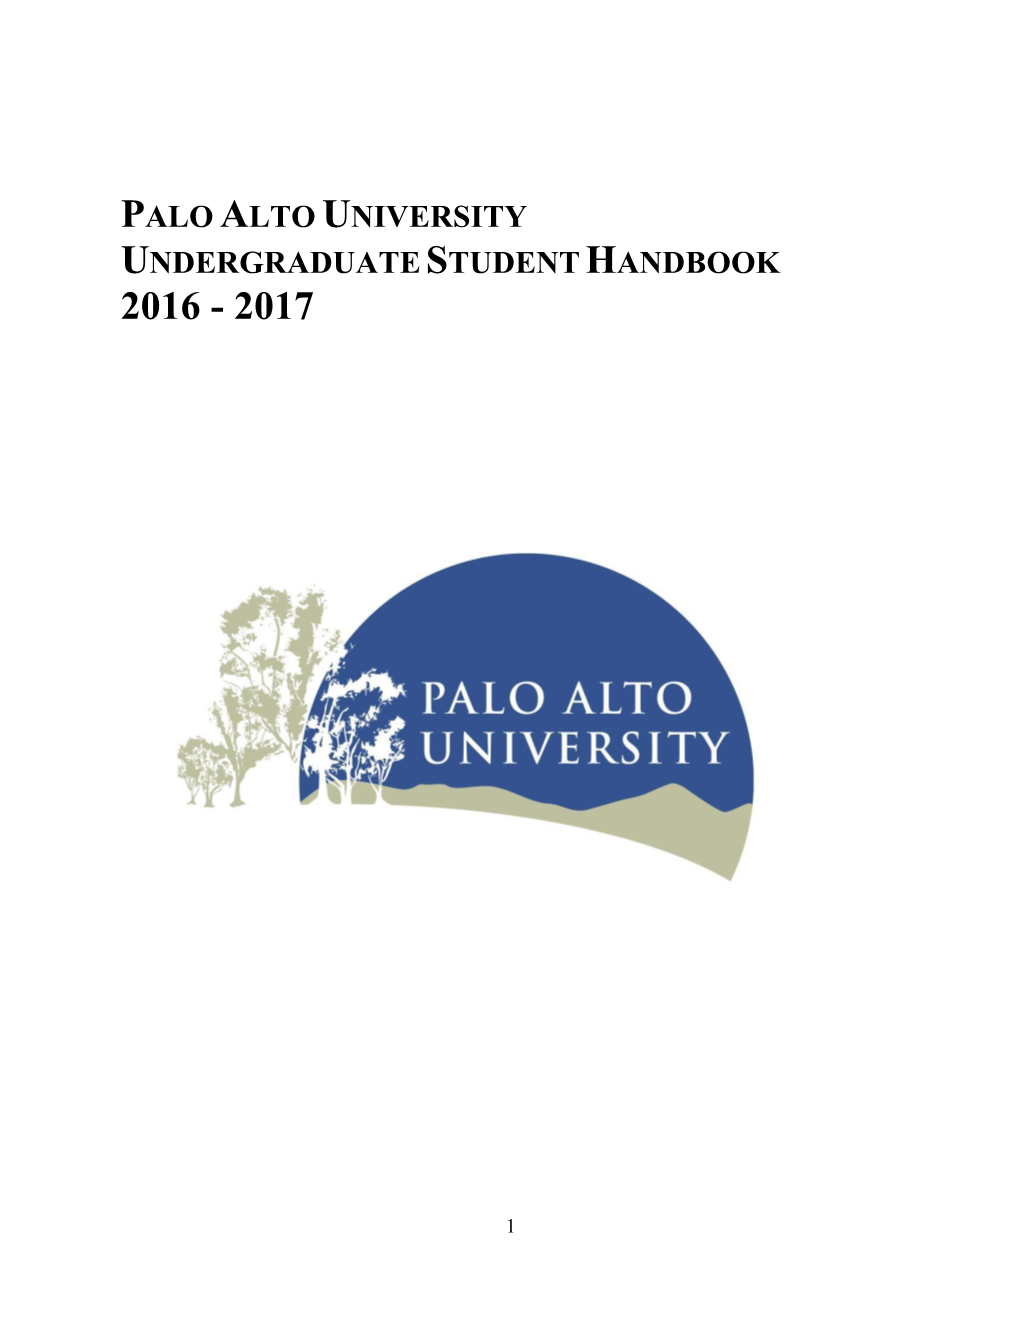 Palo Alto University Undergraduate Student Handbook 2016 - 2017